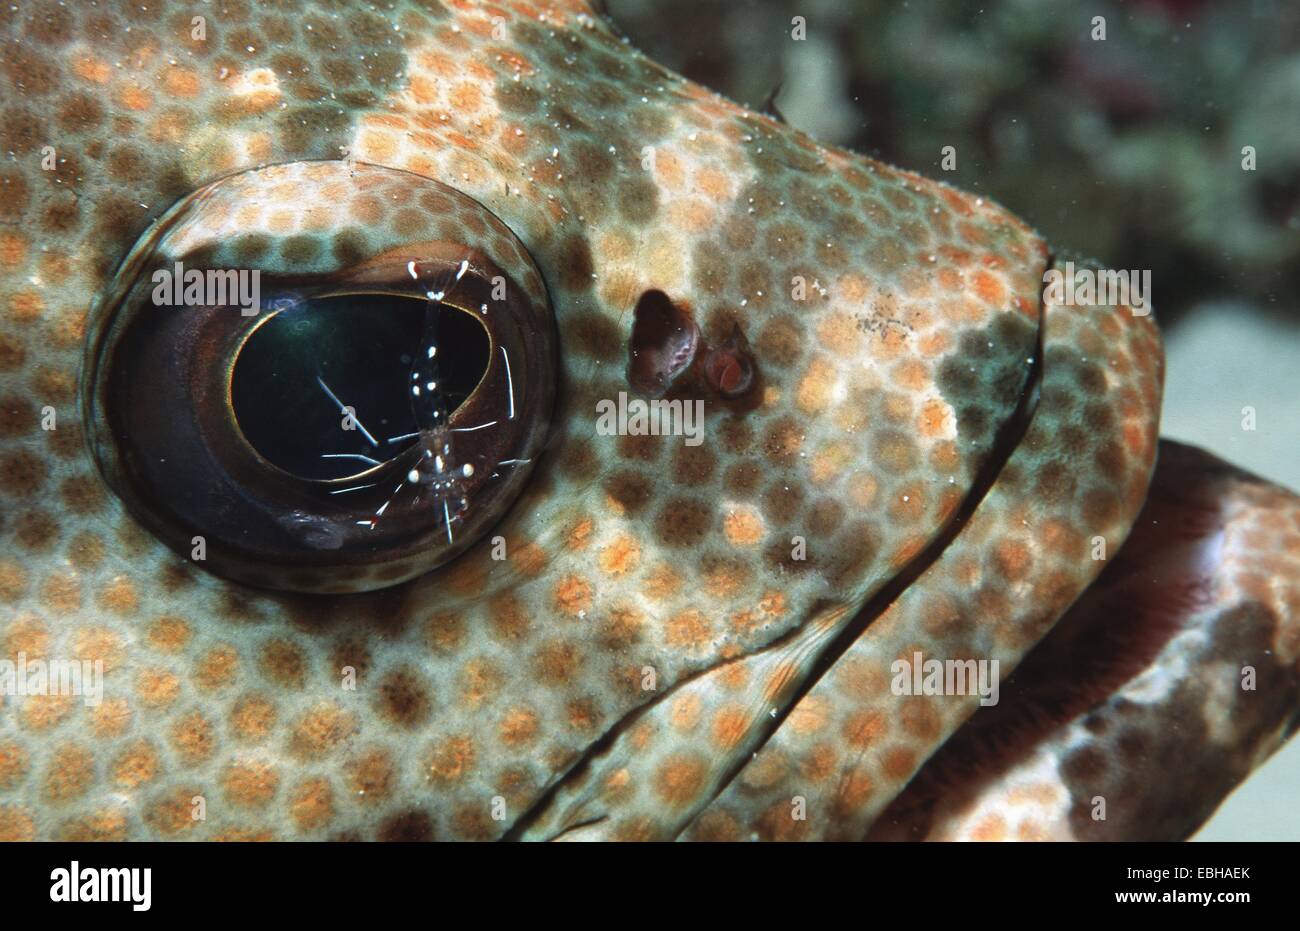 mottled grouper, camouflage grouper (Urocaridella antonbruunii, Epinephelus microdon). Stock Photo